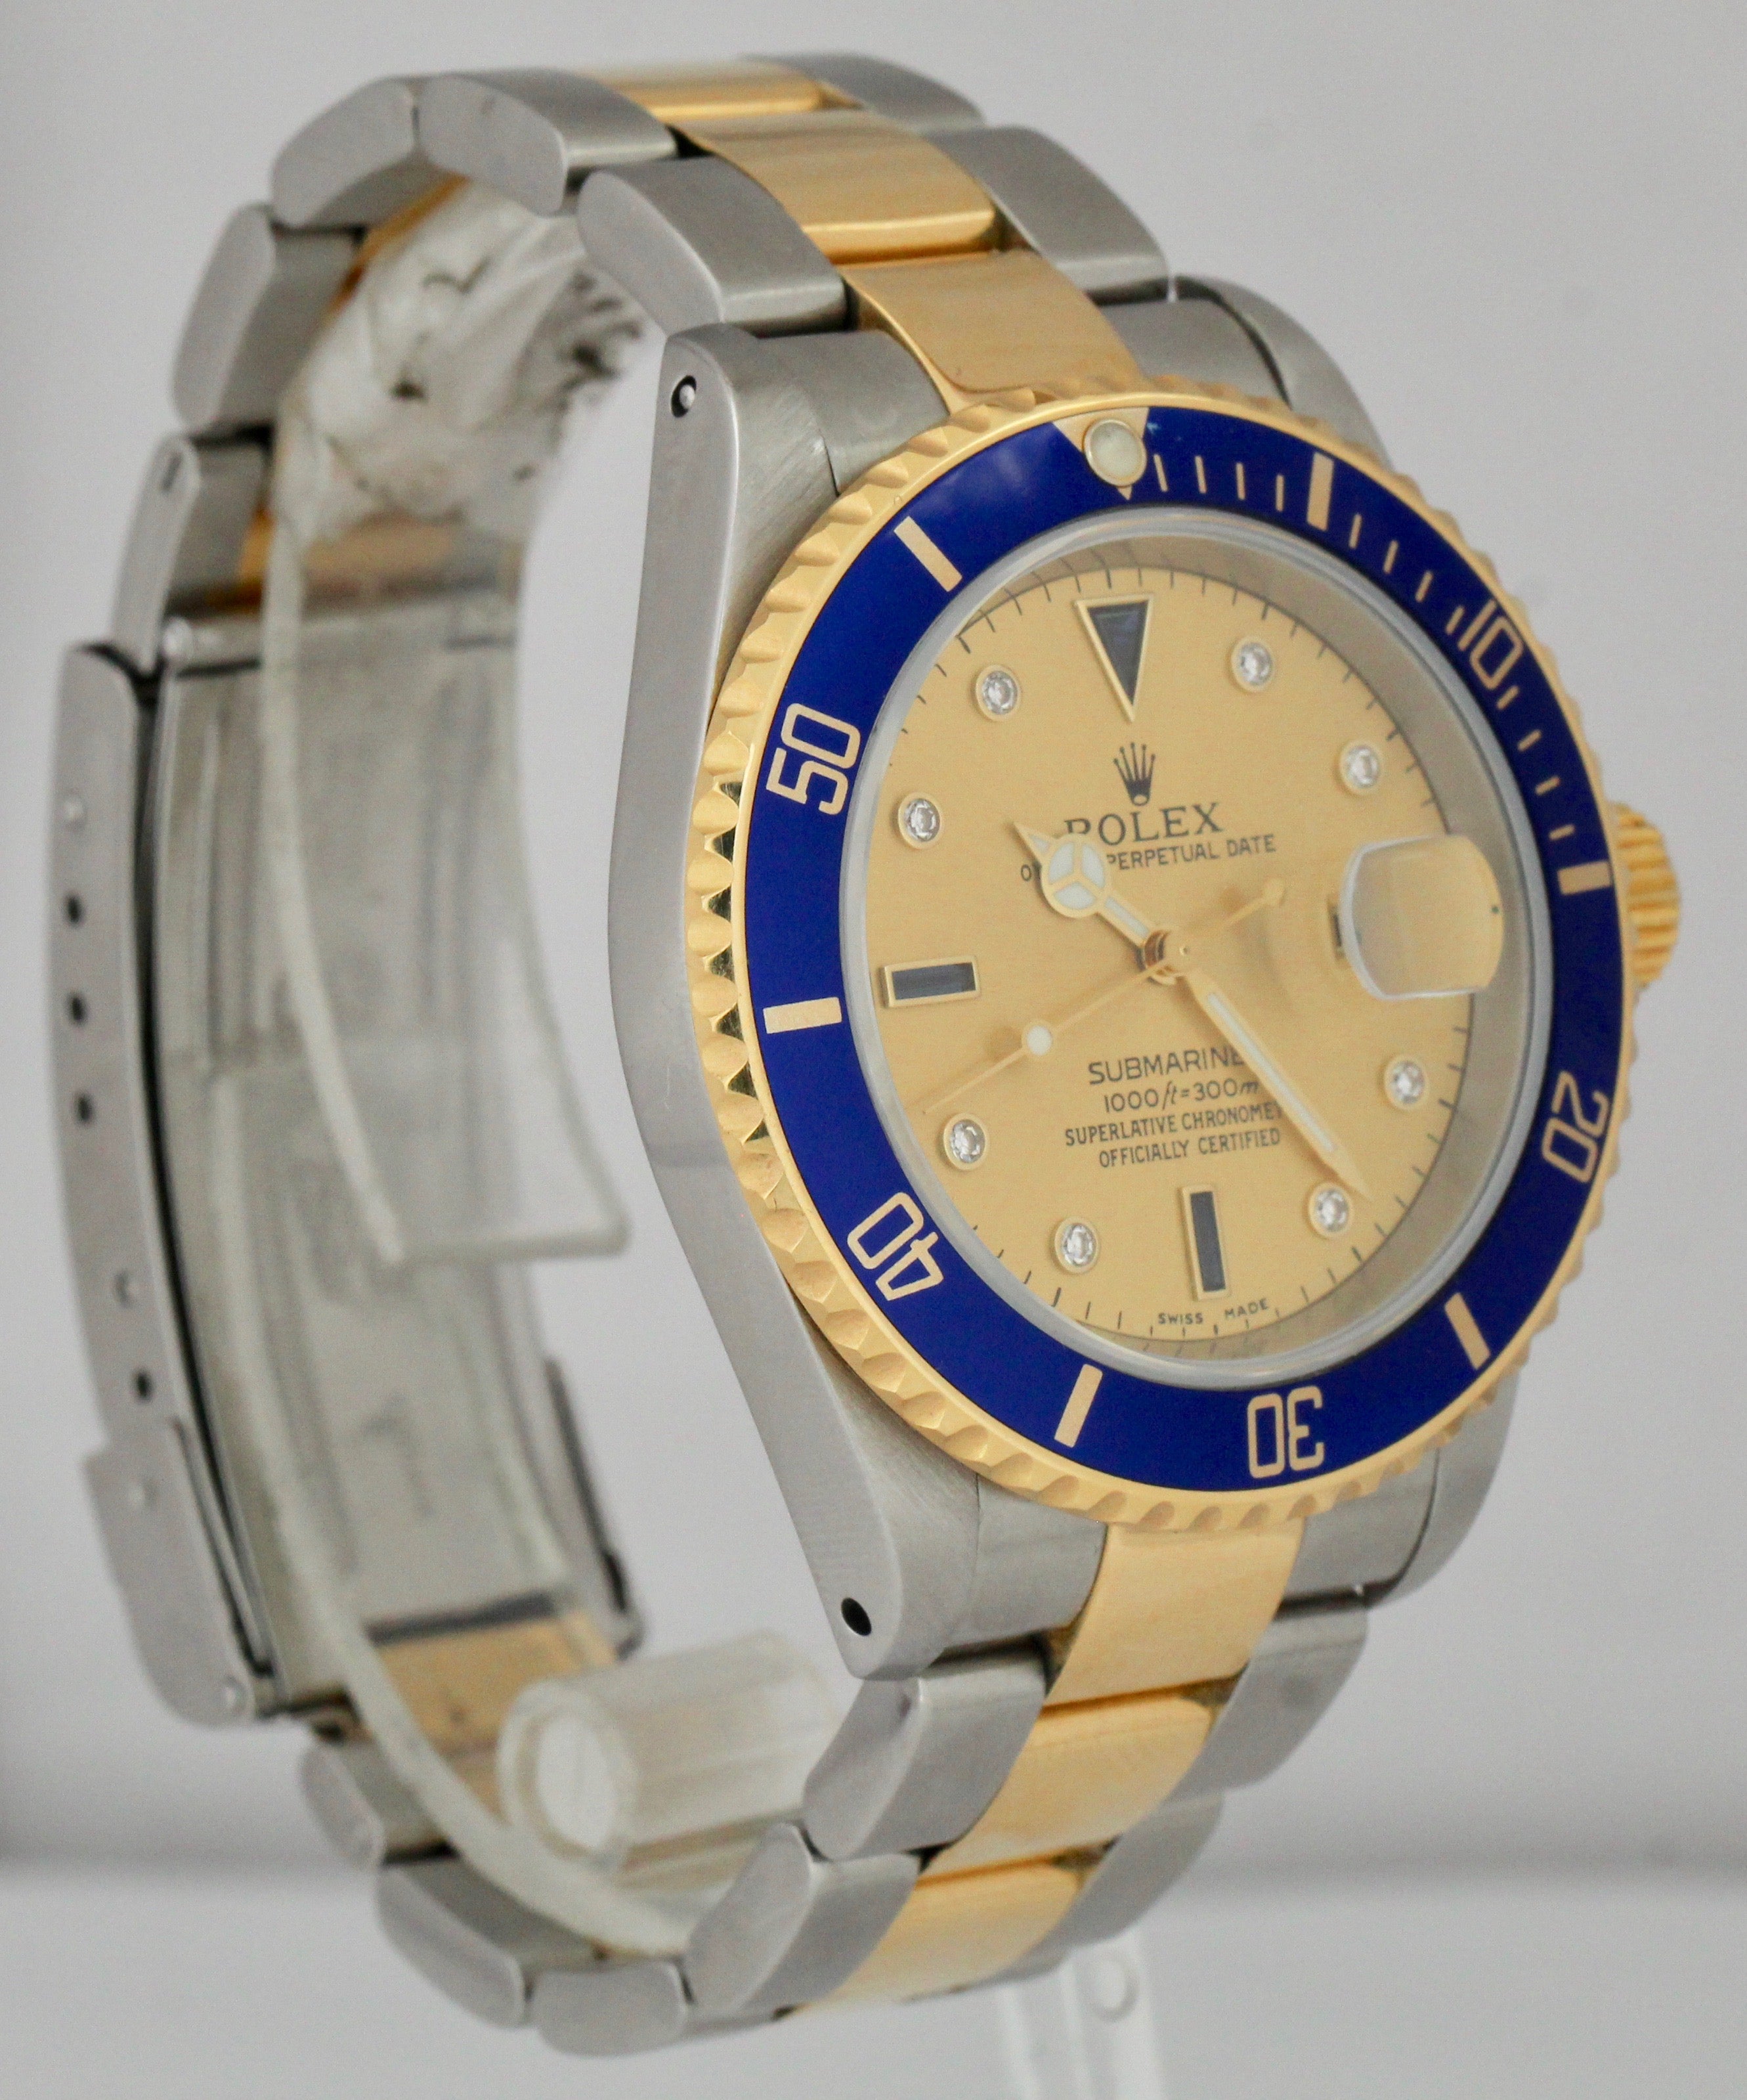 2002 Rolex Submariner Serti Sapphire Diamond Champagne Dial 16613 Two-Tone Watch